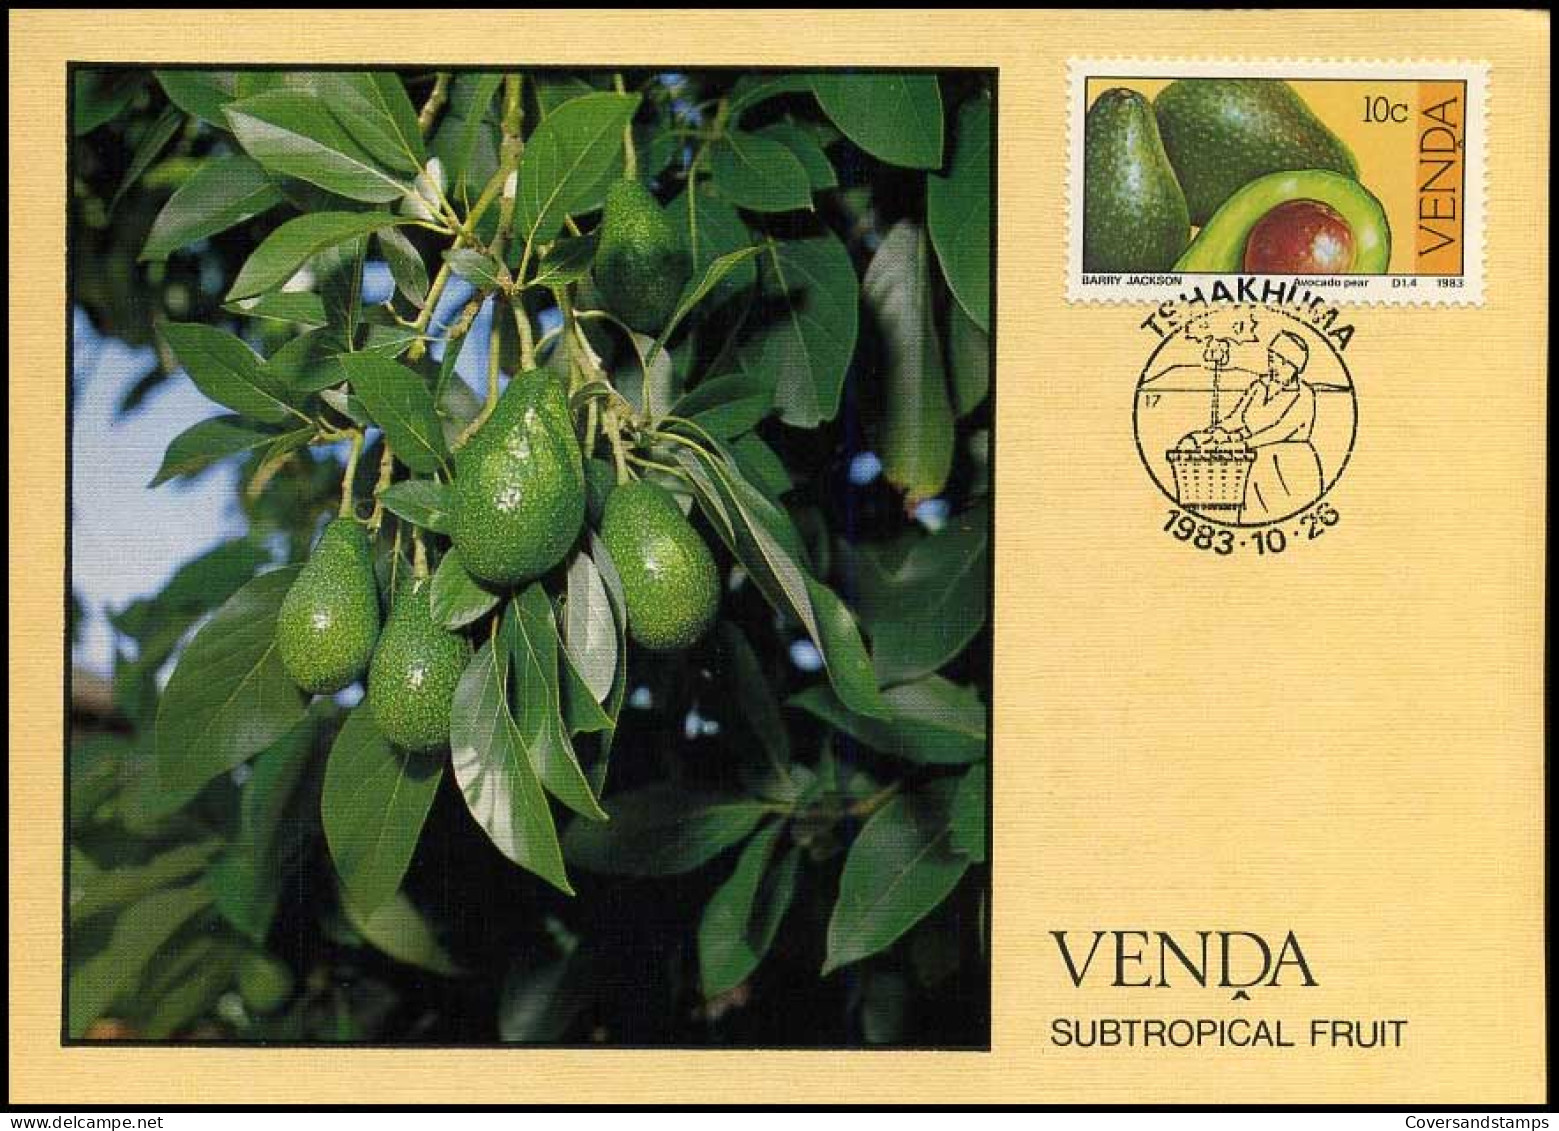 Venda - Maximumcard - Subtropical Fruit - Fruits